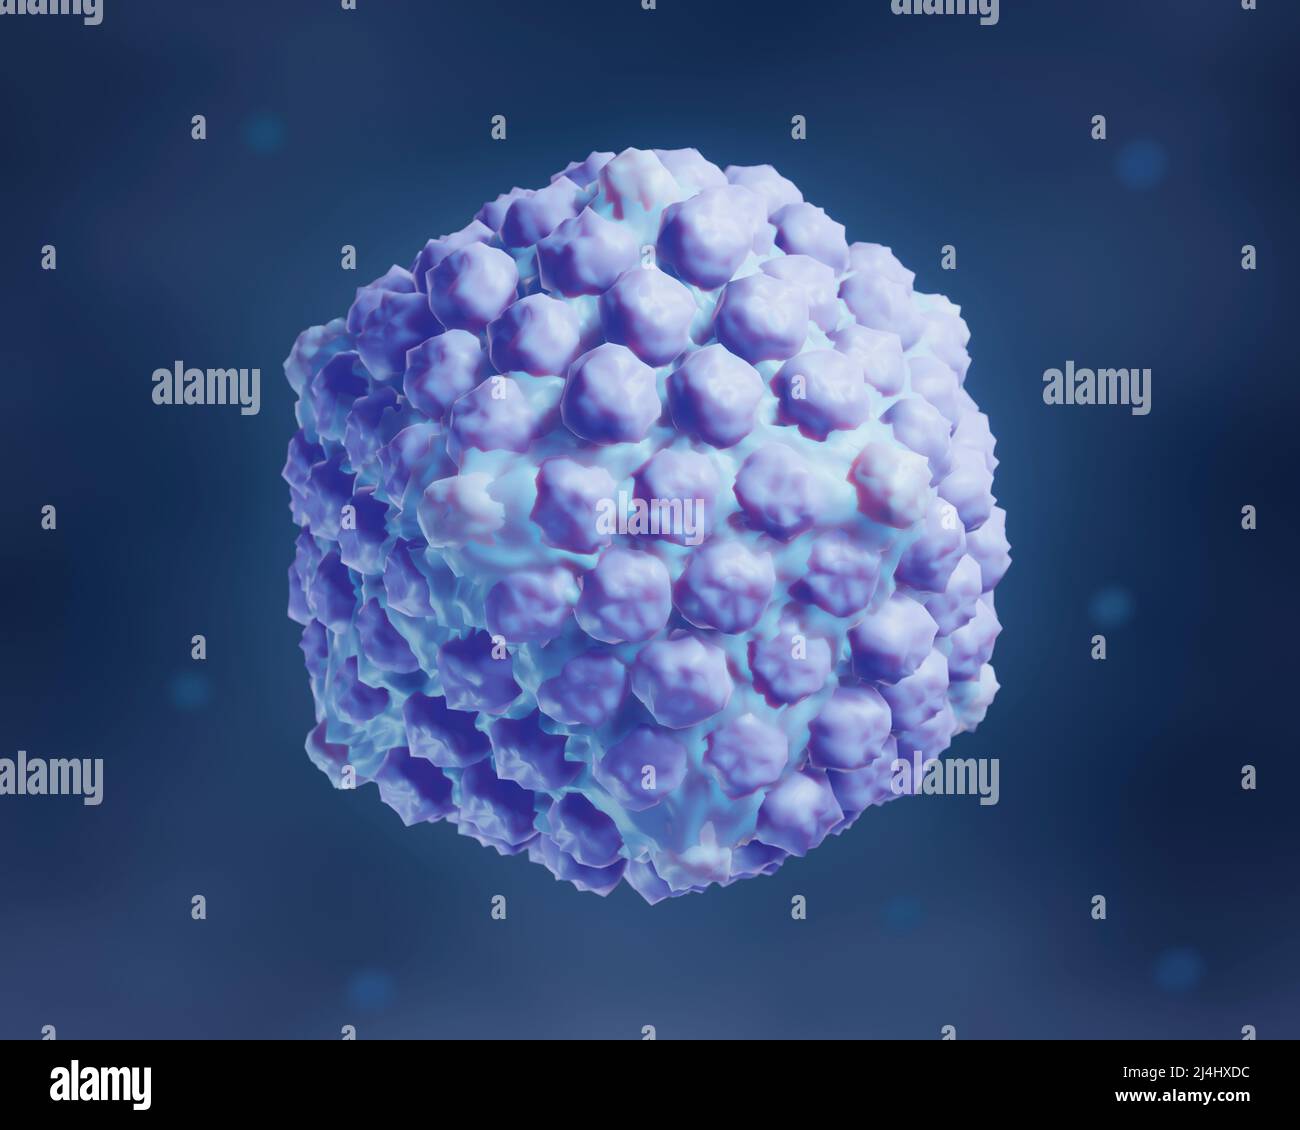 Herpes simplex viruseses, illustration Stock Photo